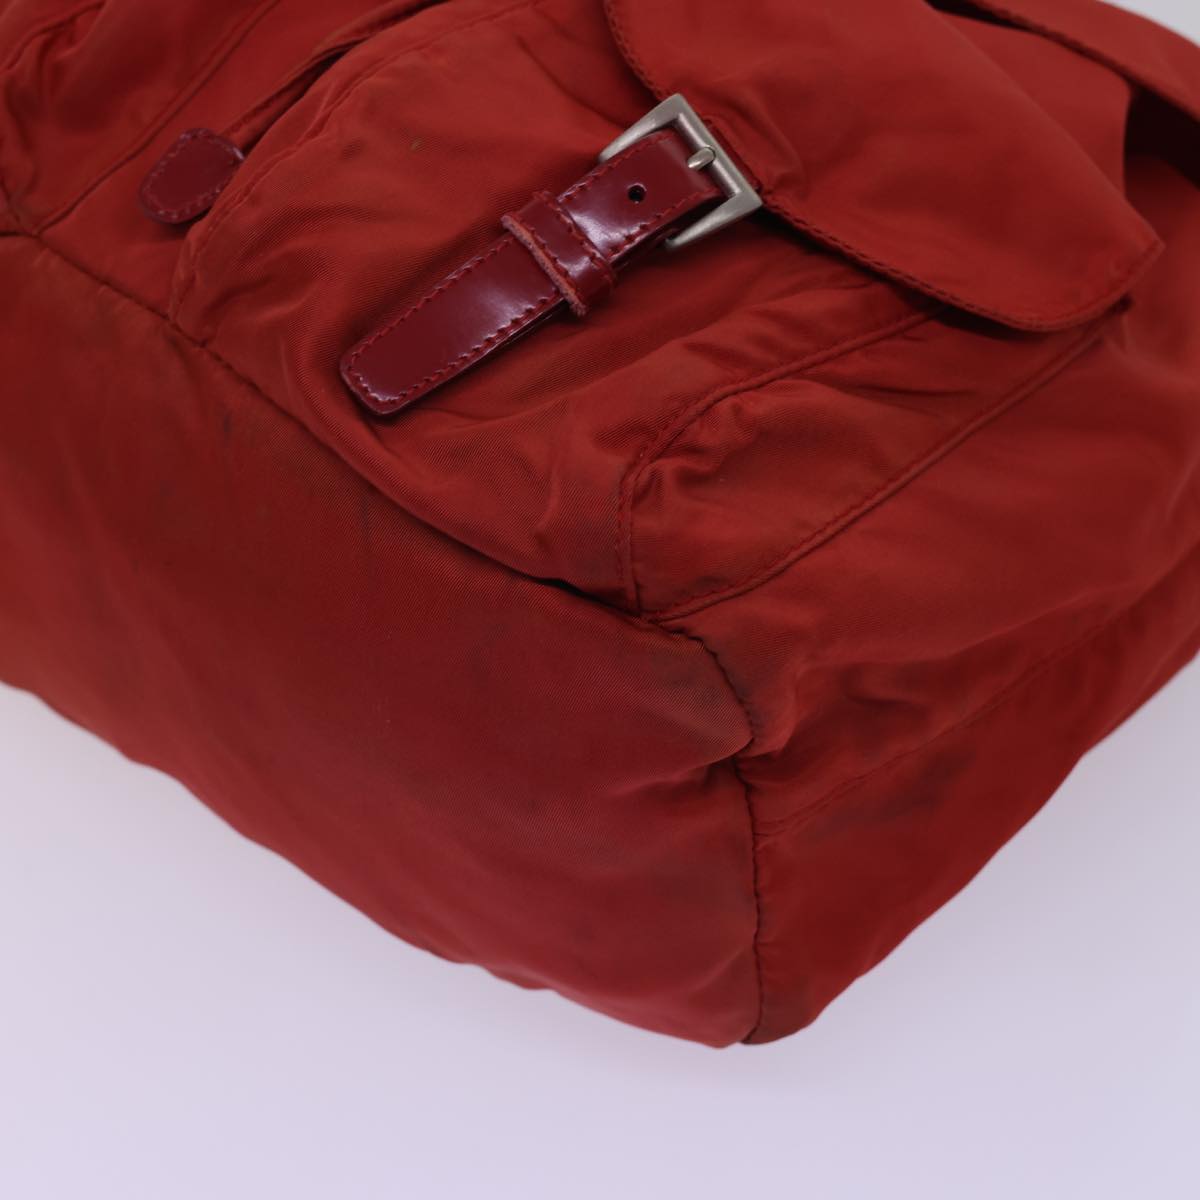 PRADA Backpack Nylon Red Auth 54890